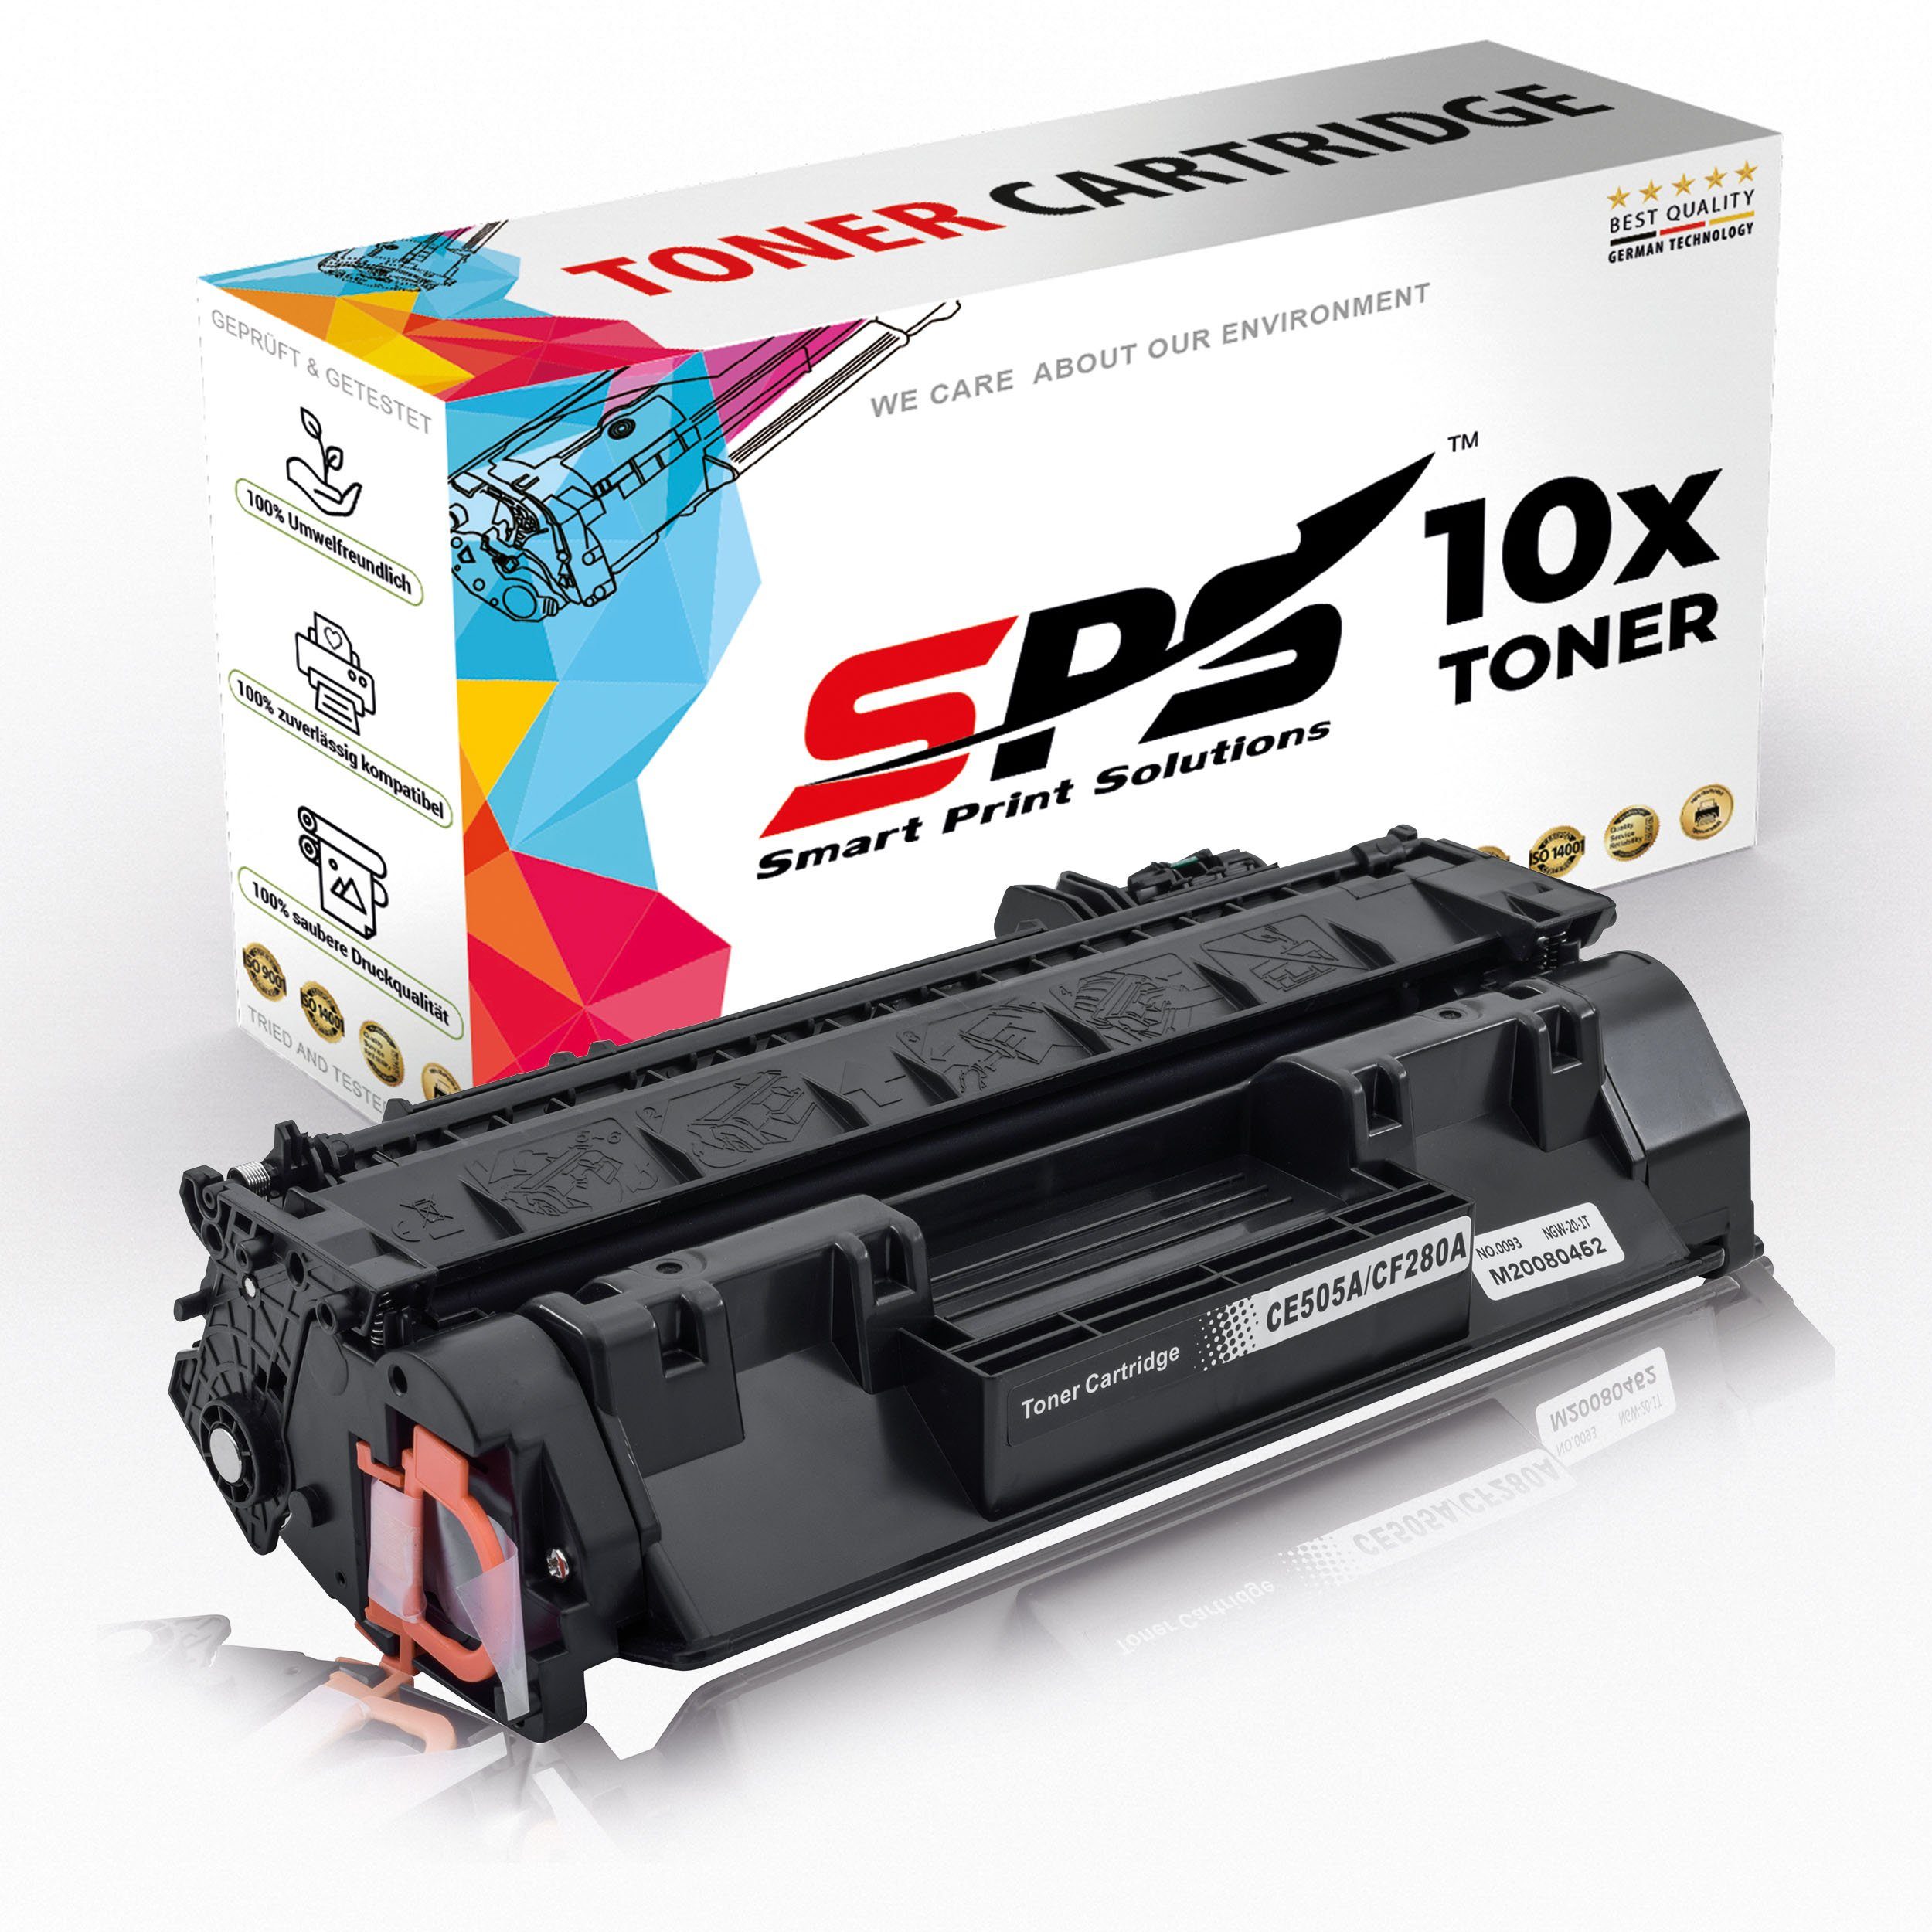 SPS Tonerkartusche Kompatibel für HP Laserjet Pro 400 M401DNE 80A, (10er Pack) | Tonerpatronen